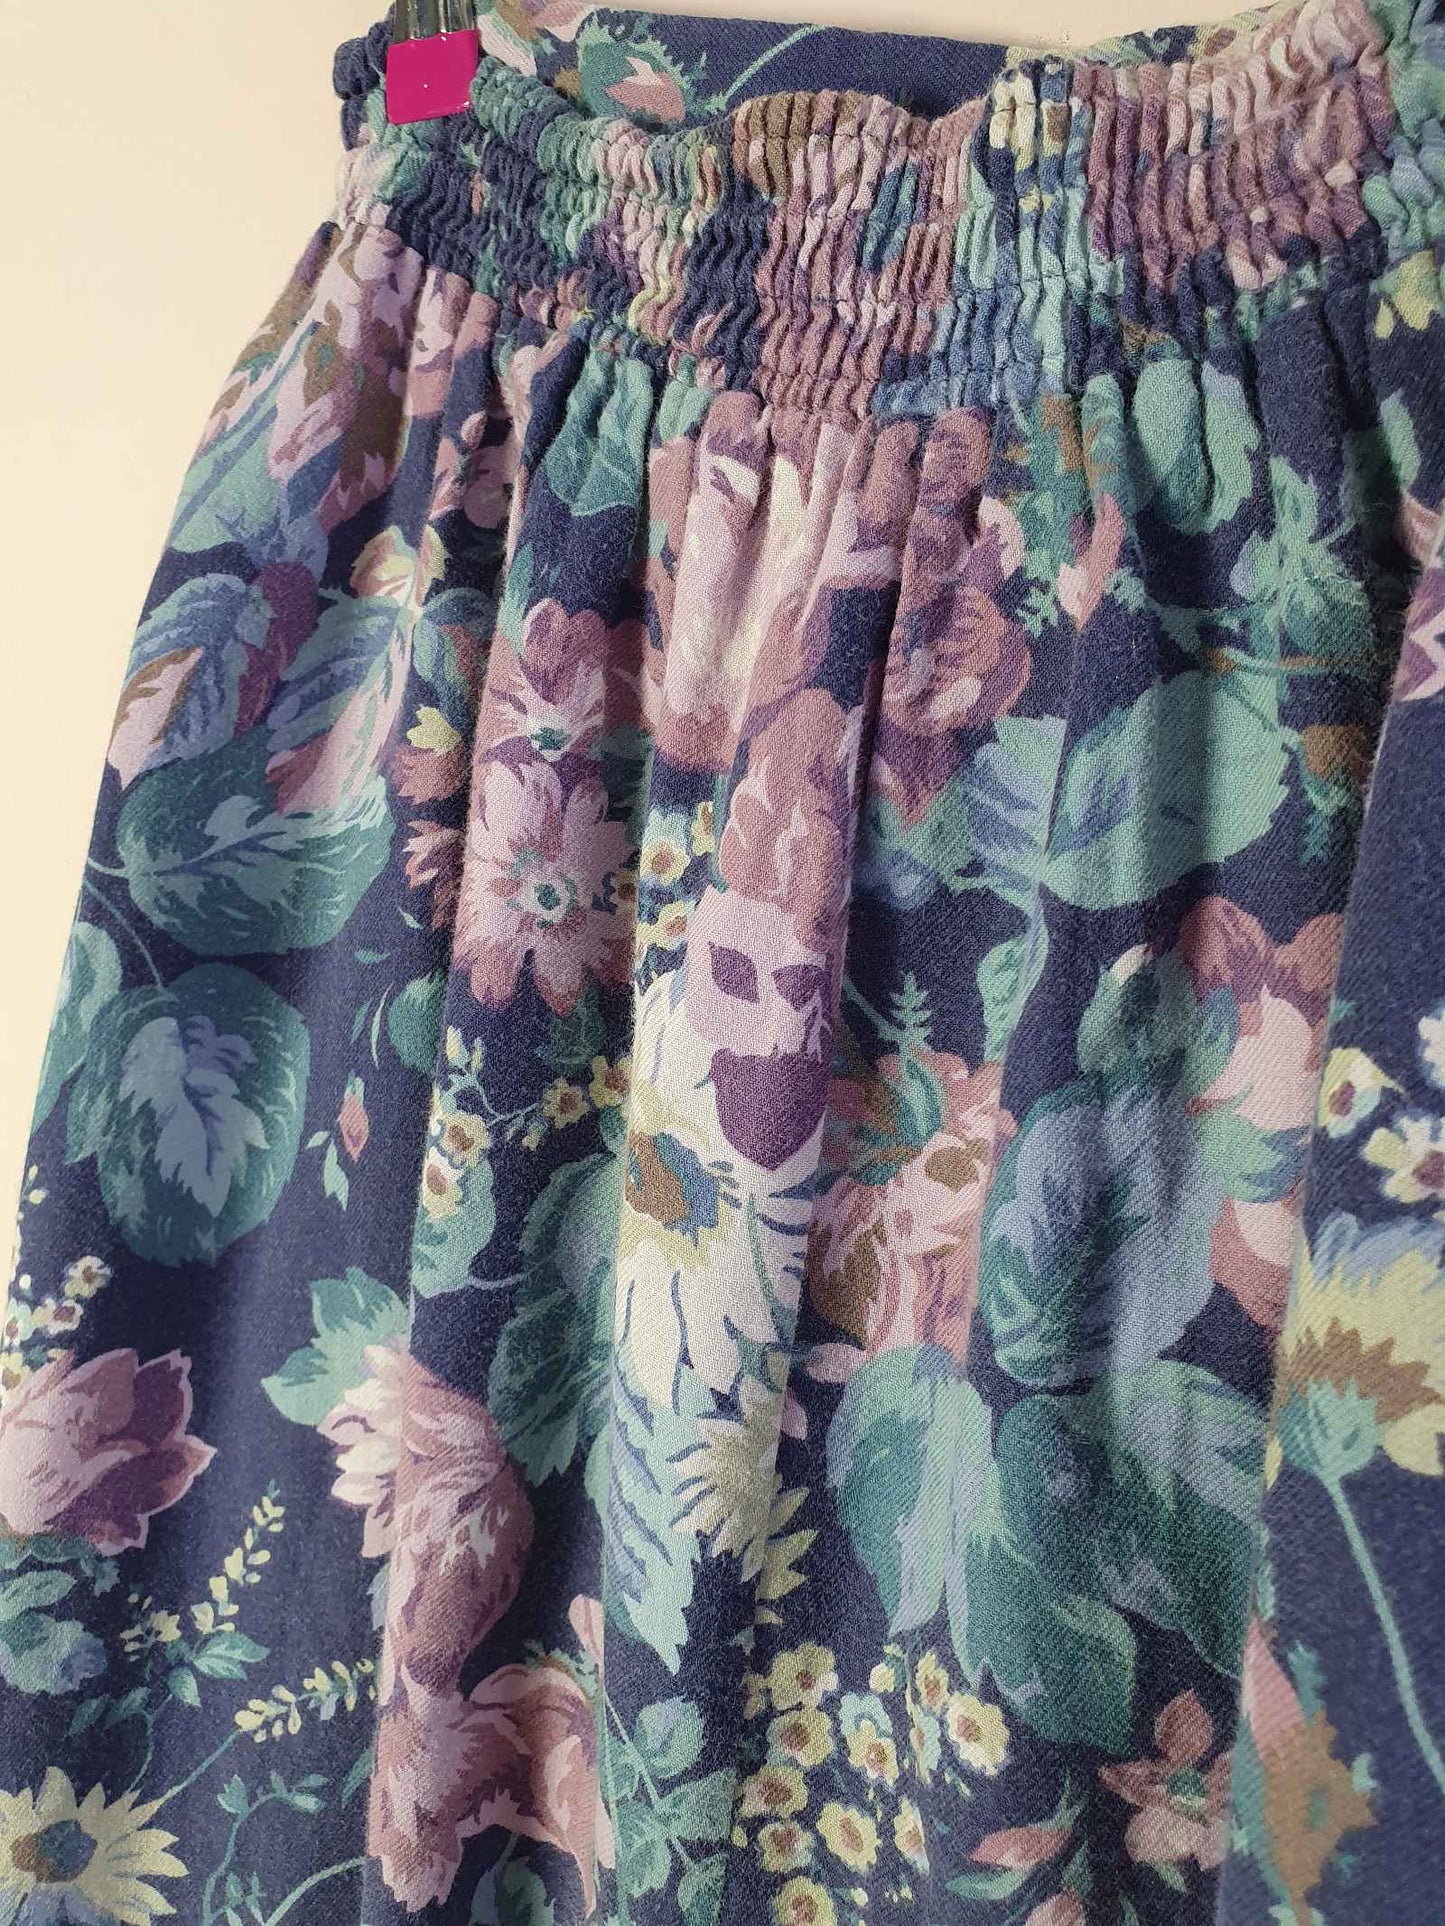 Vintage 1980s Laura Ashley Floral Skirt - English Classics Size 12